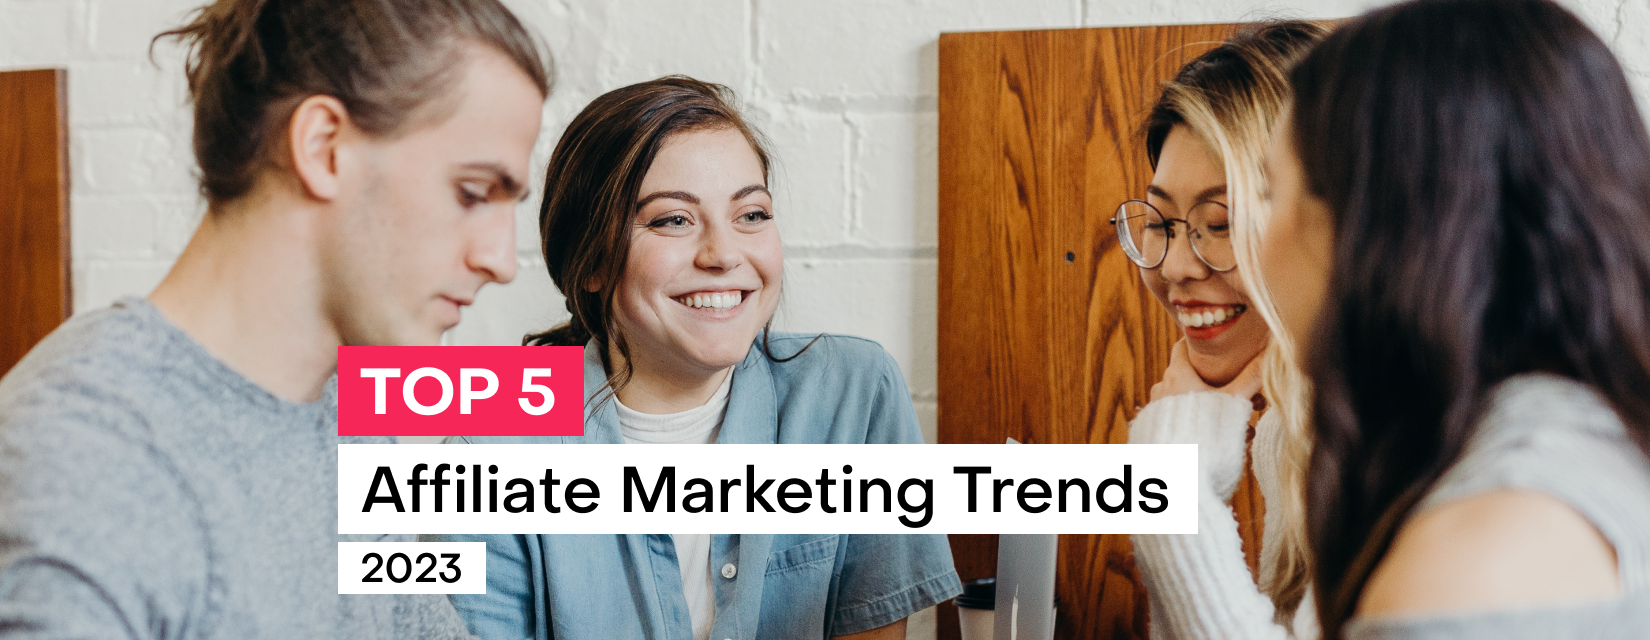 Top 5 Affiliate Marketing Trends 2023